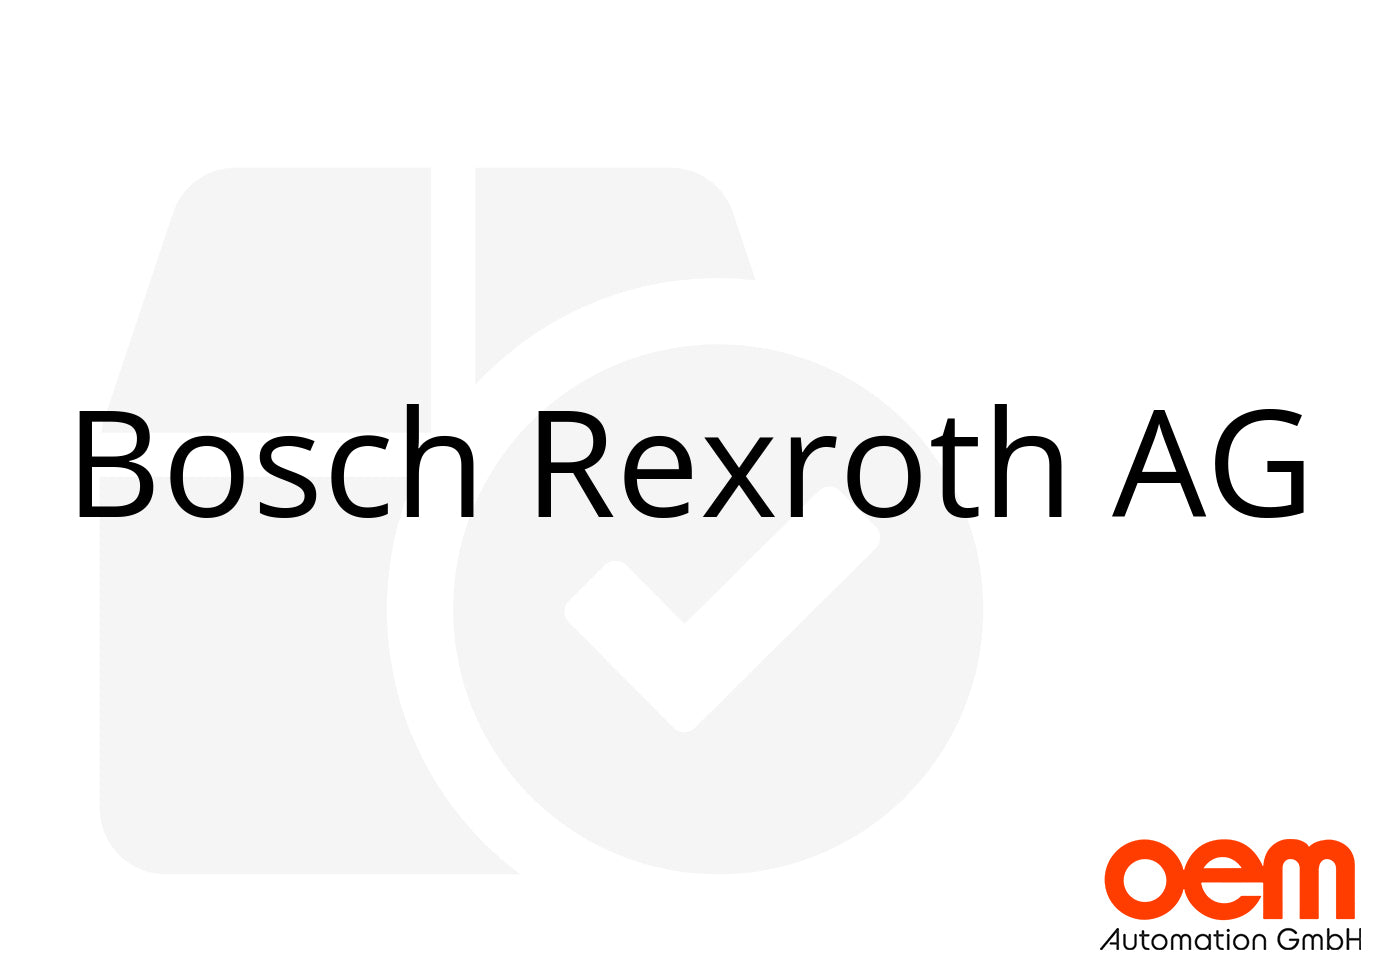 Bosch Rexroth AG R1605-204-31/0130